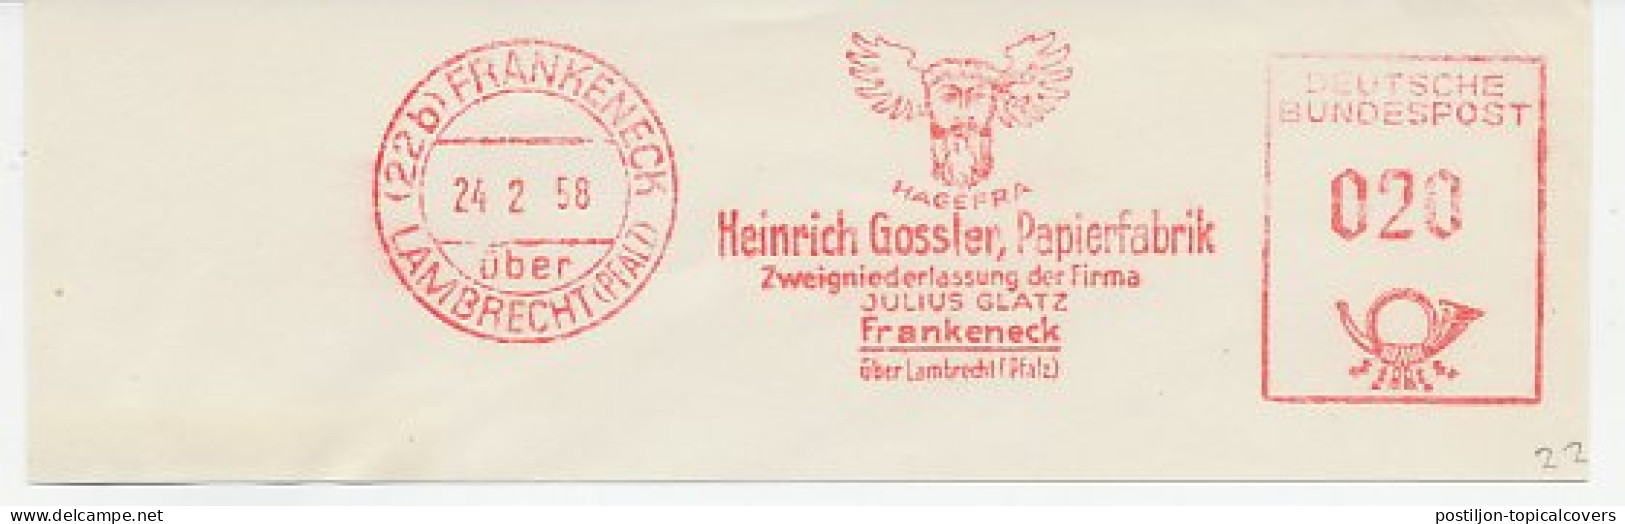 Meter Cut Germany 1958 Head - Wings - Paperfactory - Mythology